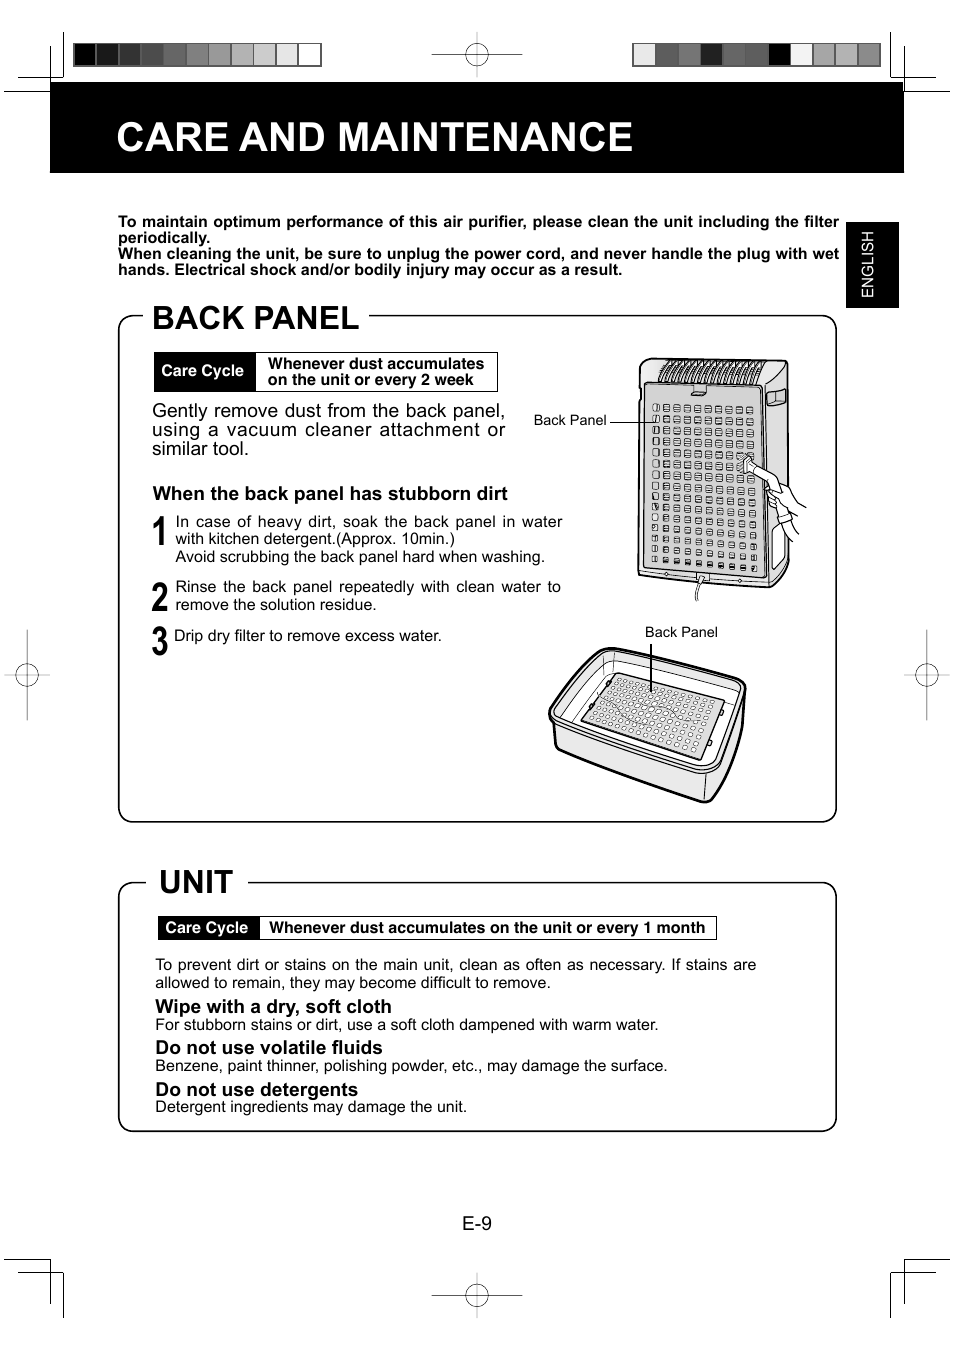 Care and maintenance, Back panel, Unit | Sharp FU-Y30EU User Manual | Page 11 / 113